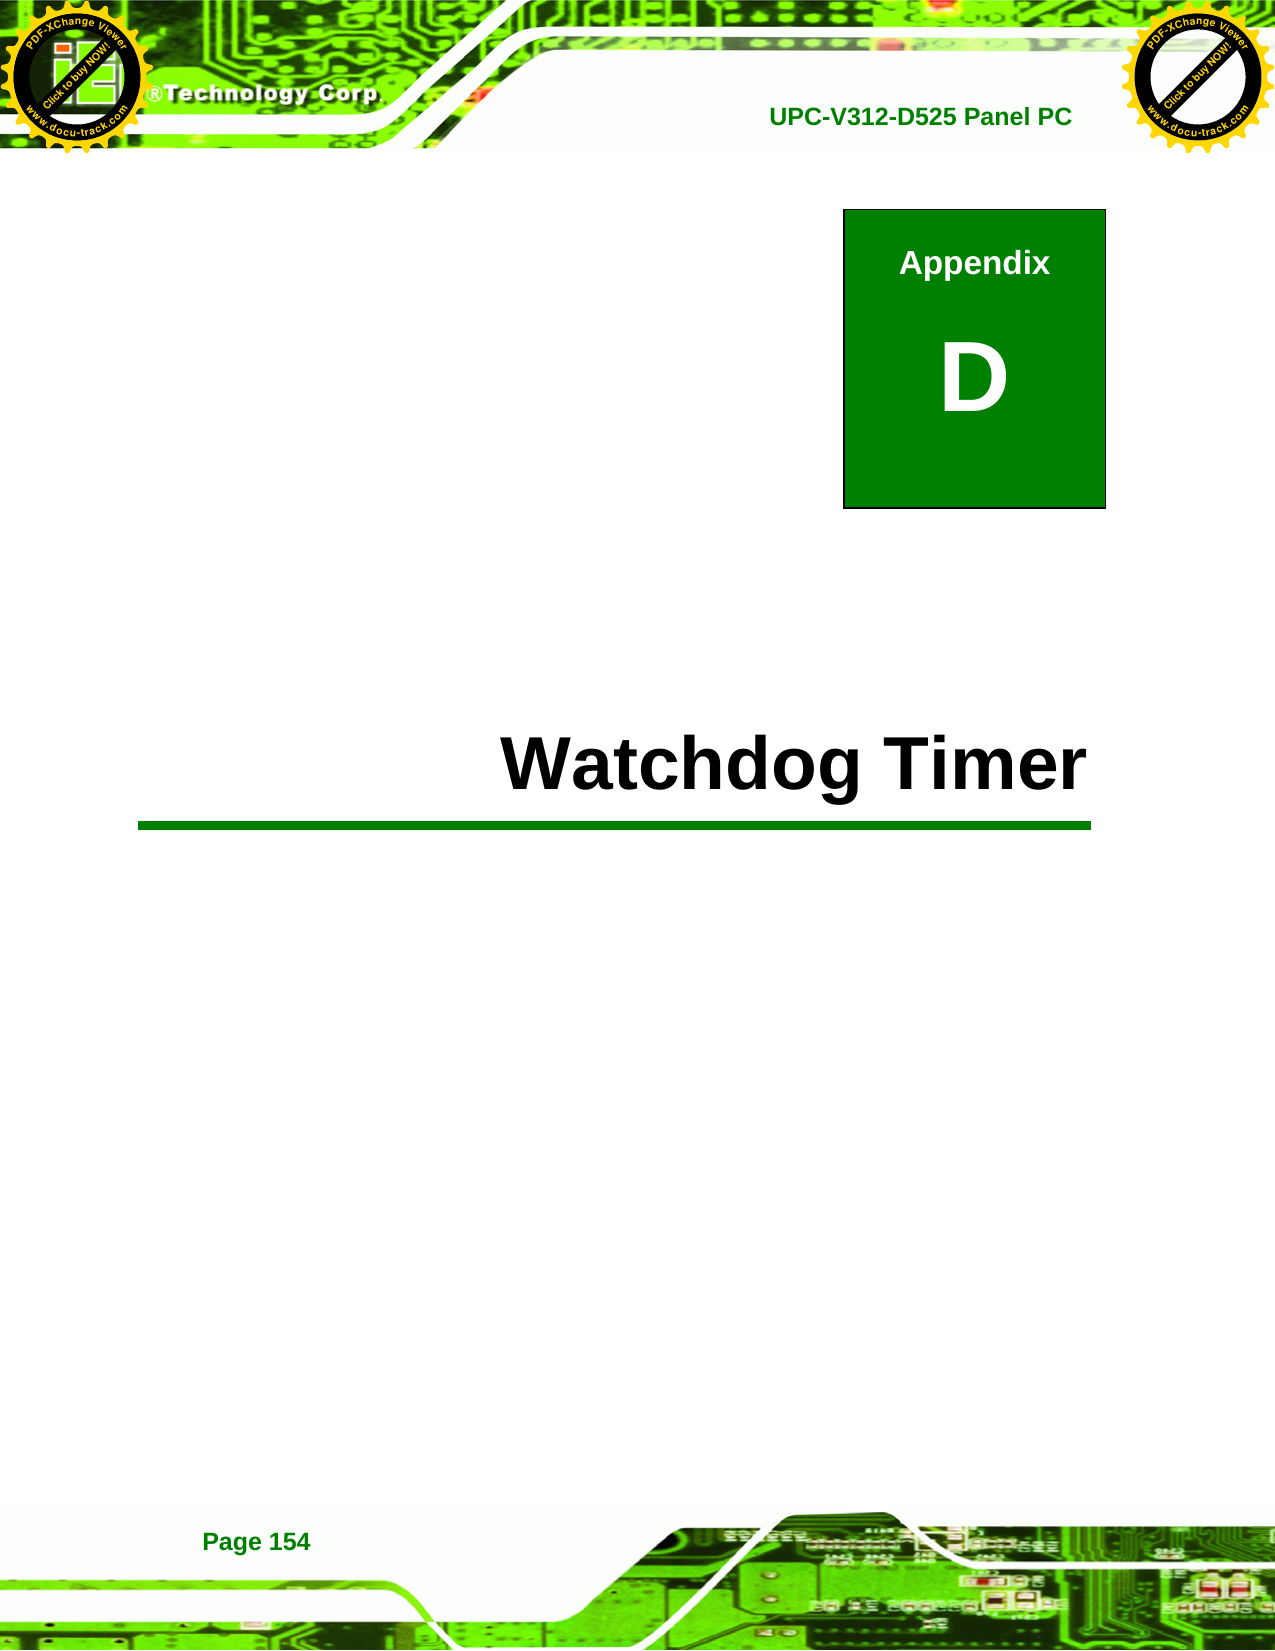   UPC-V312-D525 Panel PCPage 154              D Watchdog Timer Appendix D Click to buy NOW!PDF-XChange Viewerwww.docu-track.comClick to buy NOW!PDF-XChange Viewerwww.docu-track.com